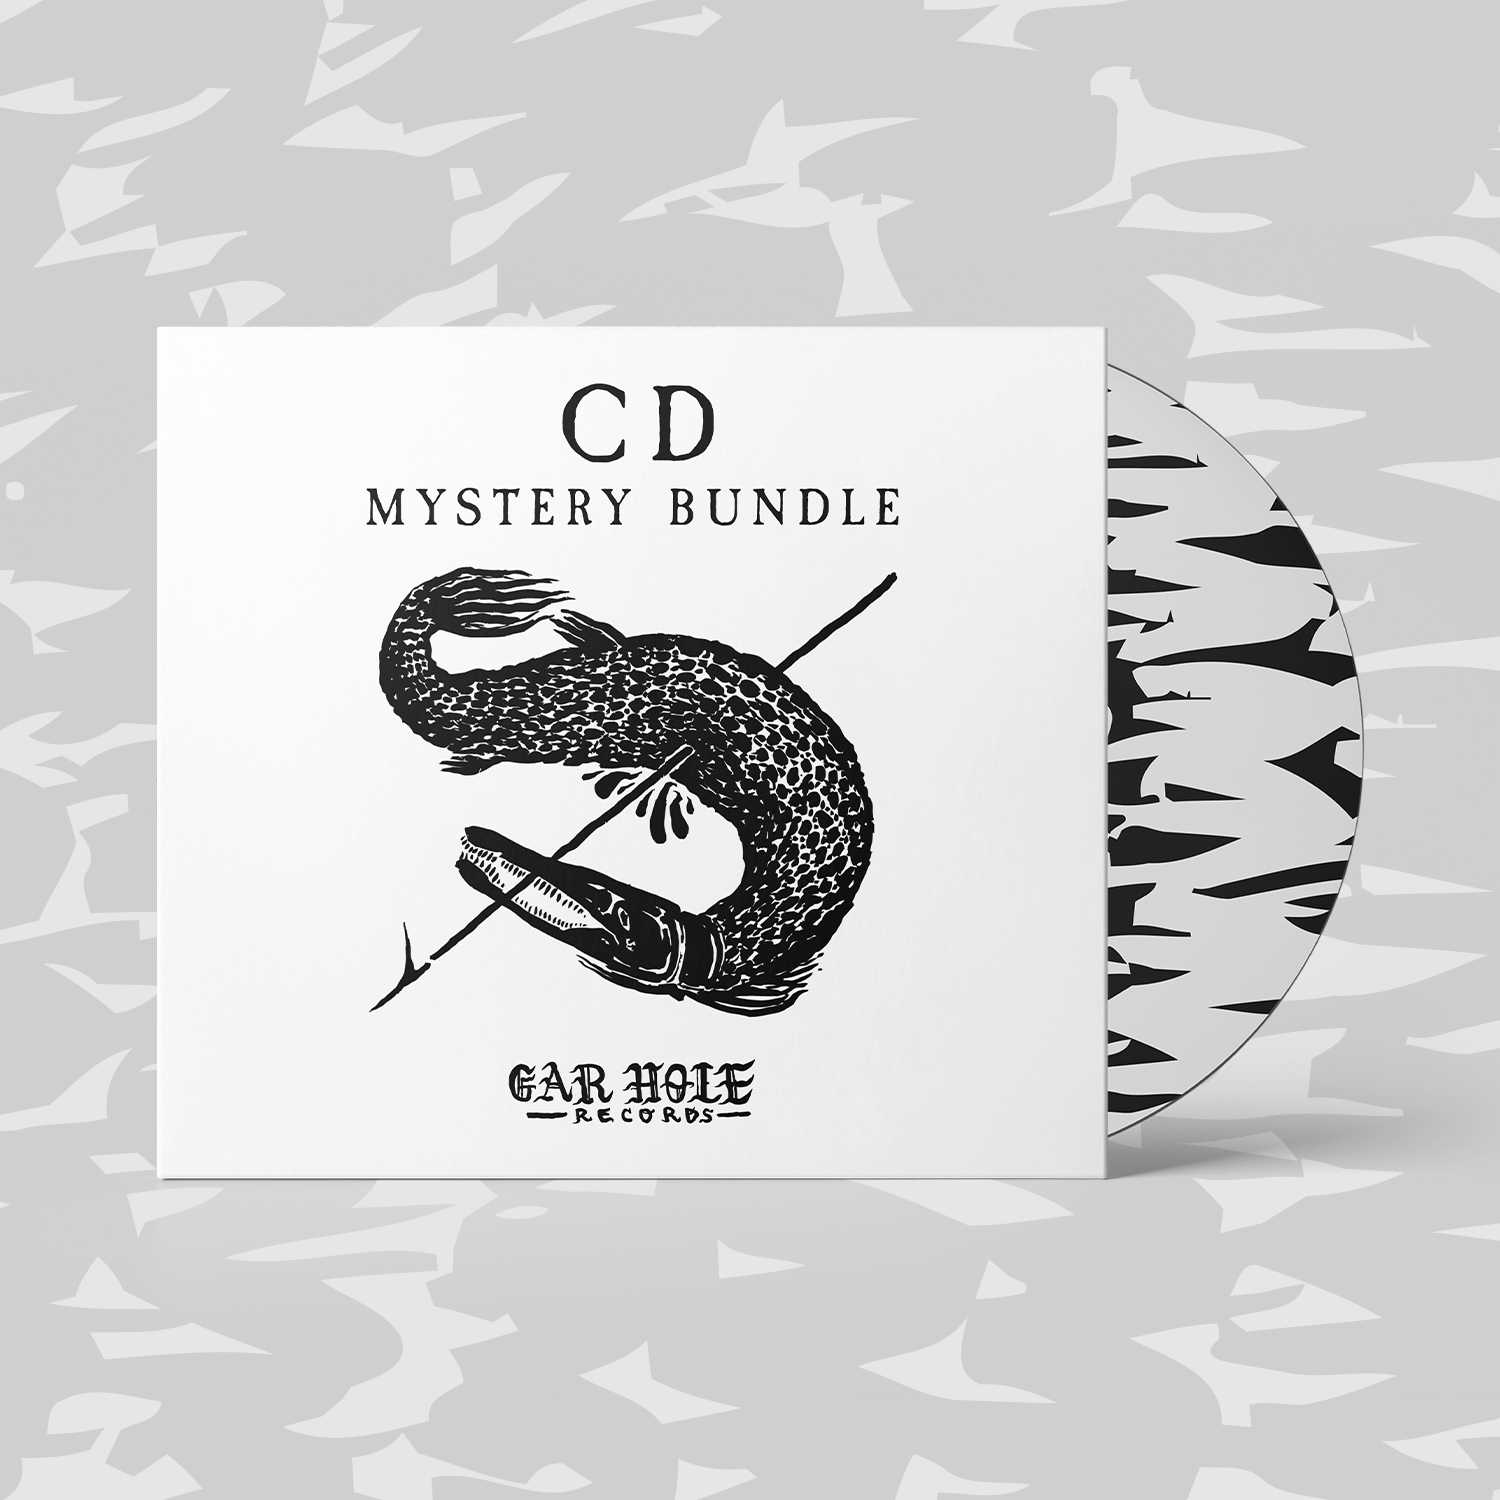 CD Mystery Bundle